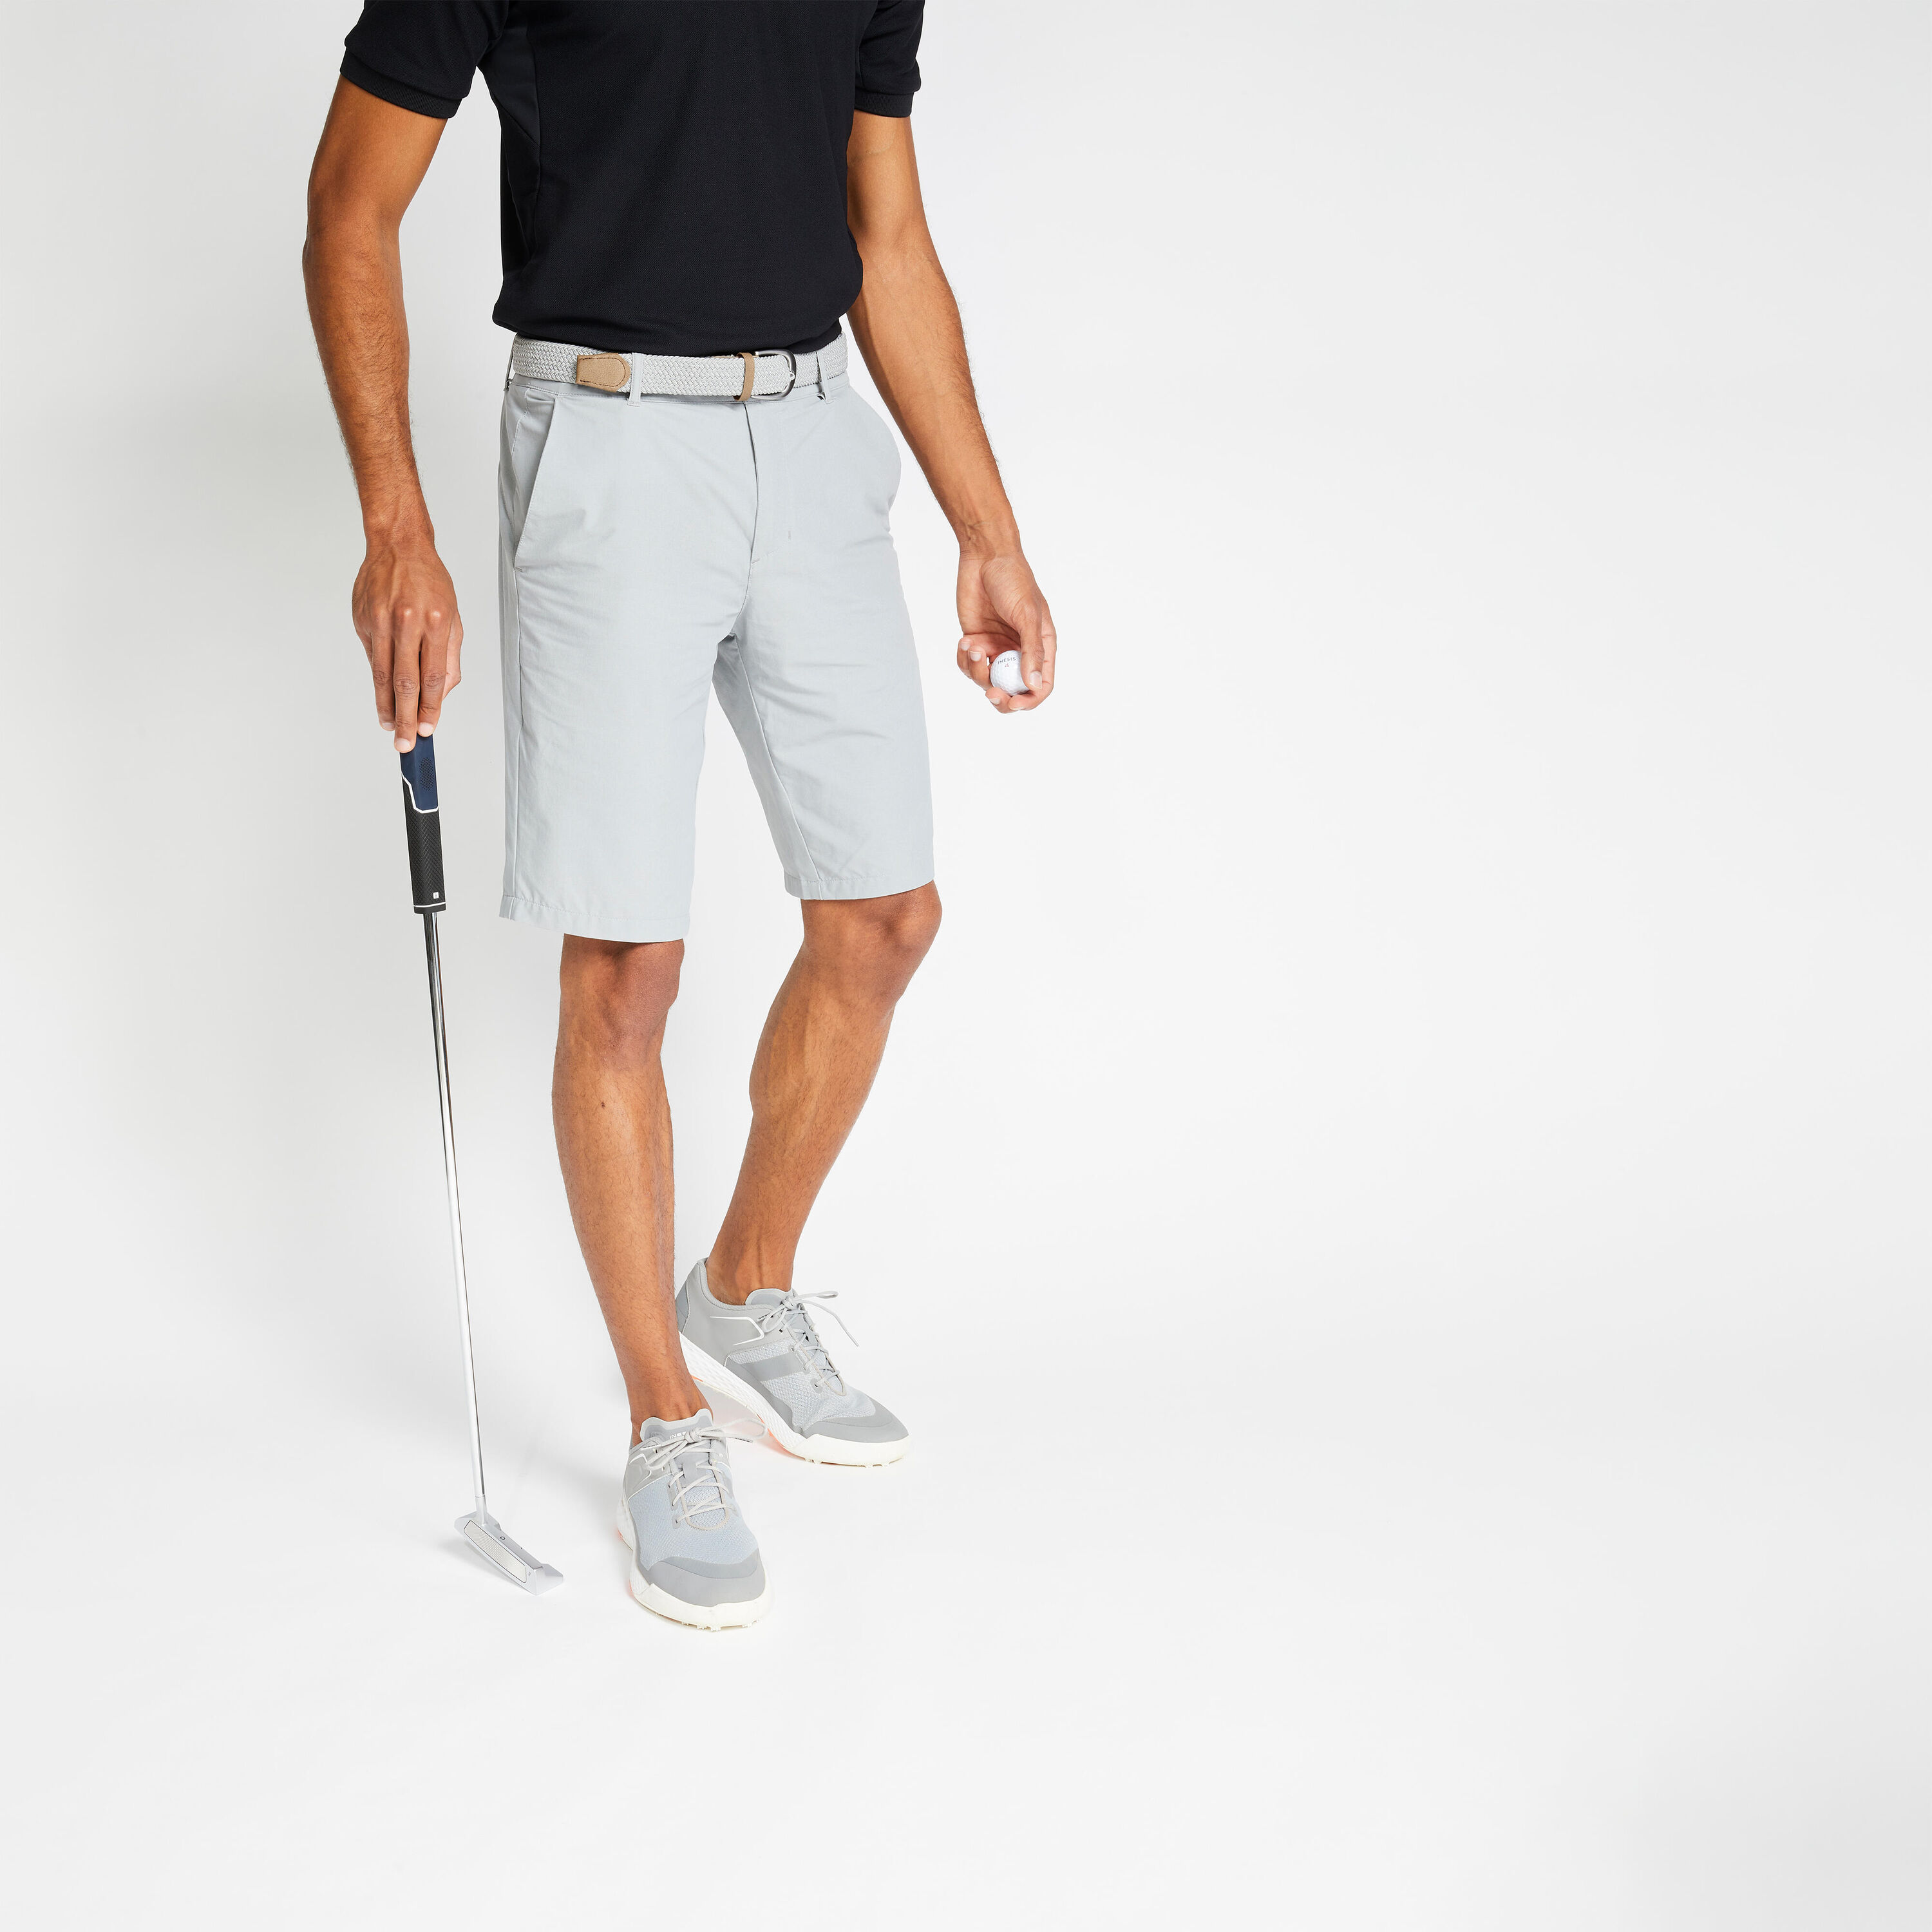 INESIS Men's golf shorts WW500 grey